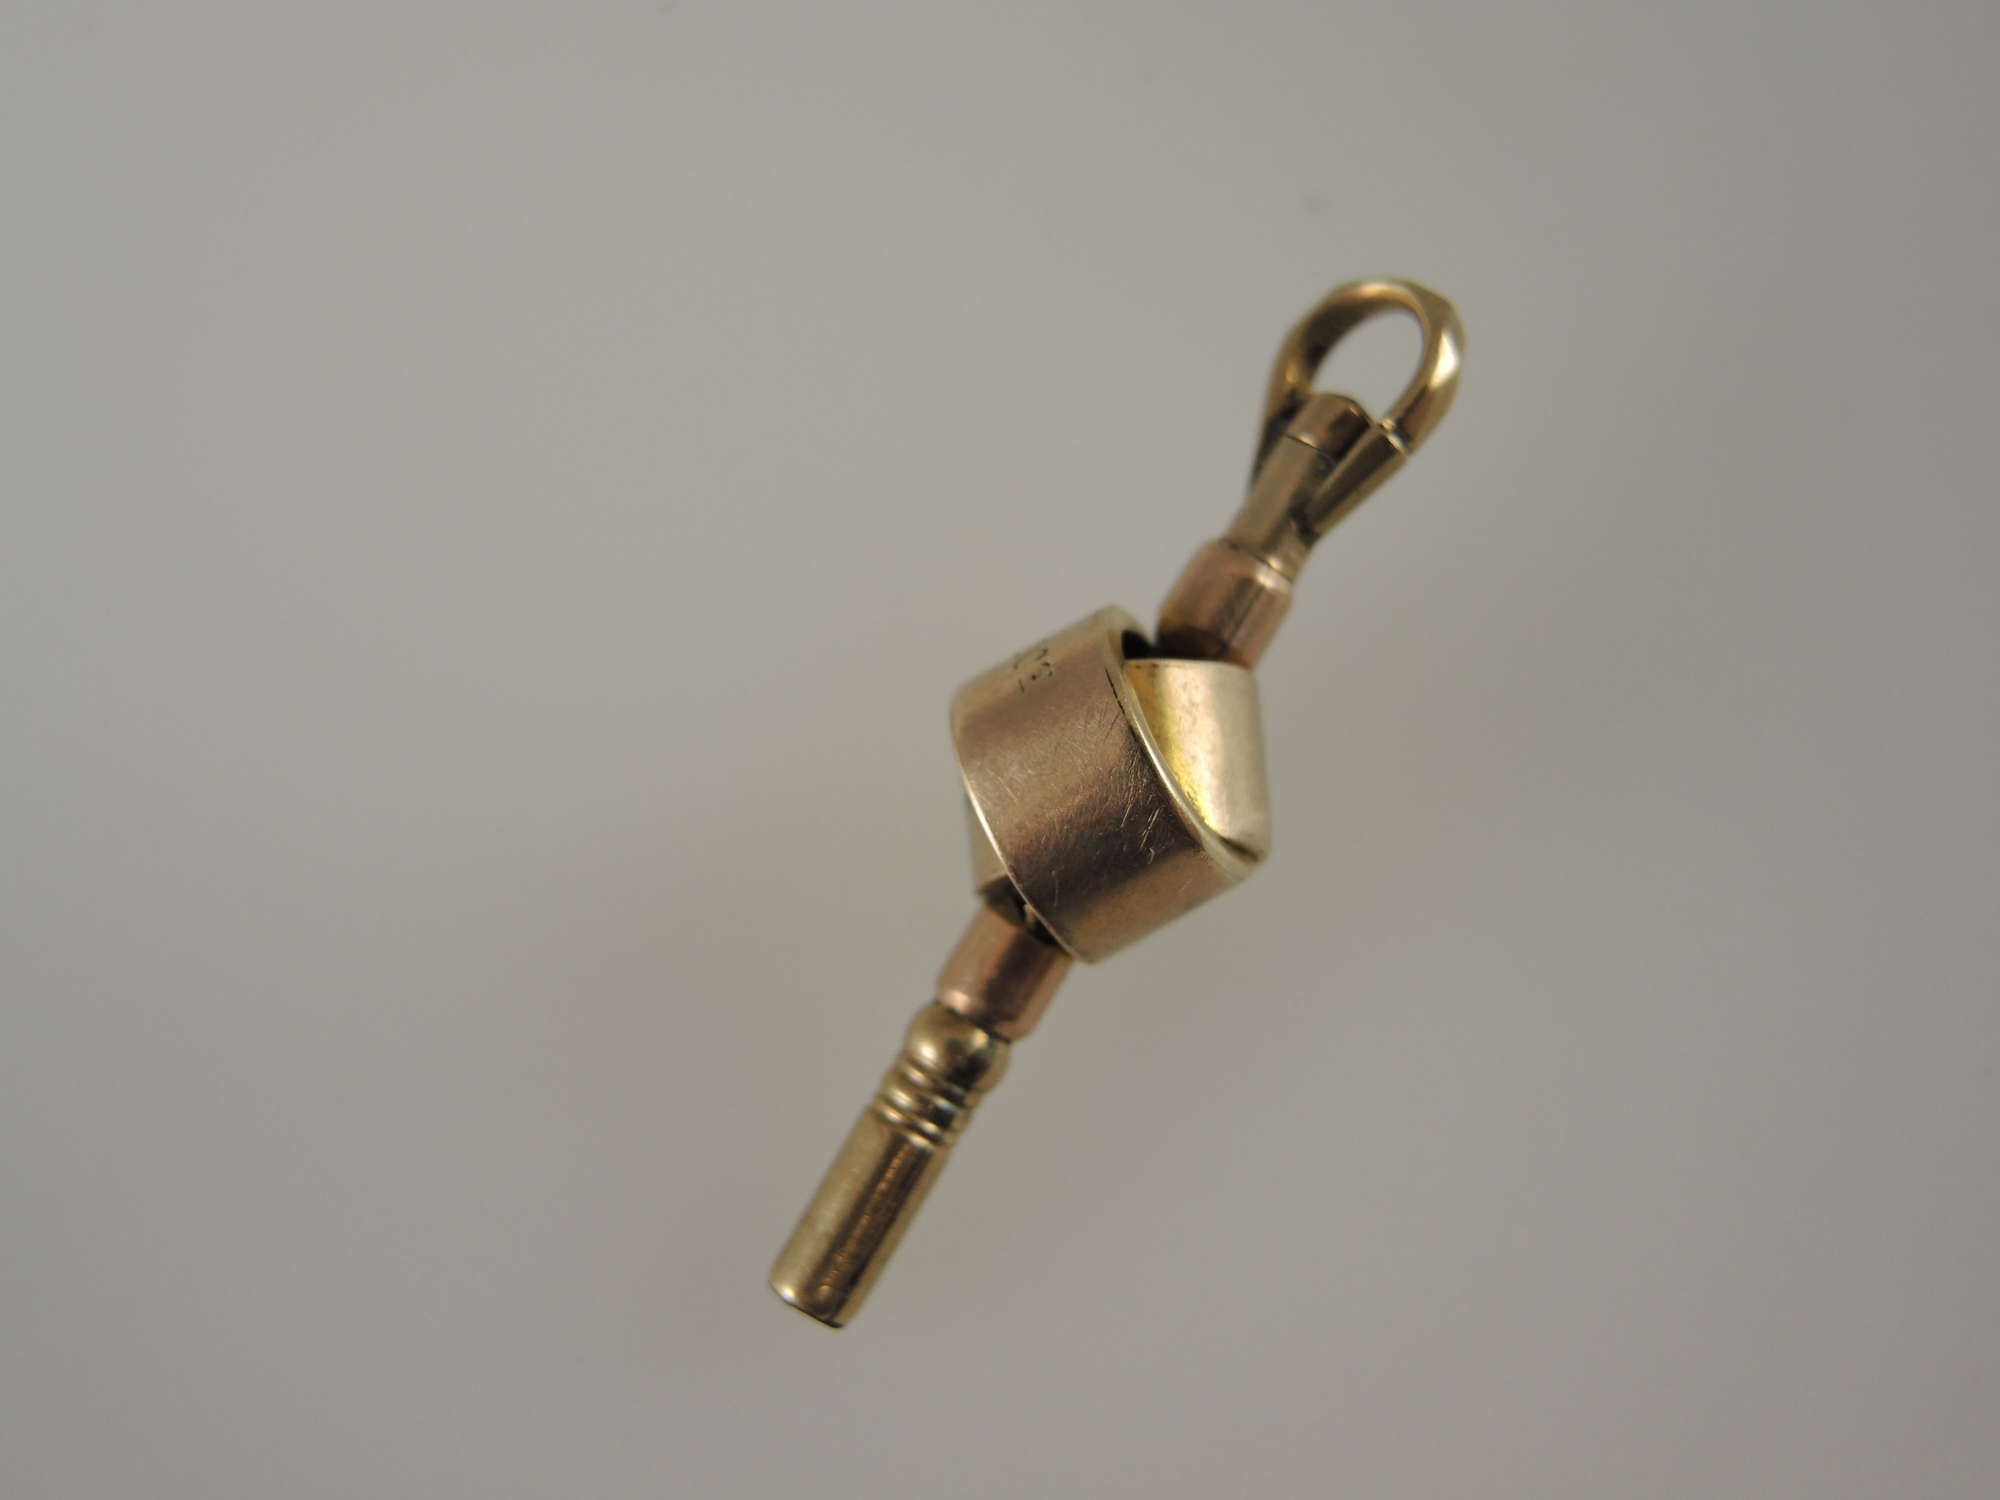 10K gold Knot design pocket watch key c1850